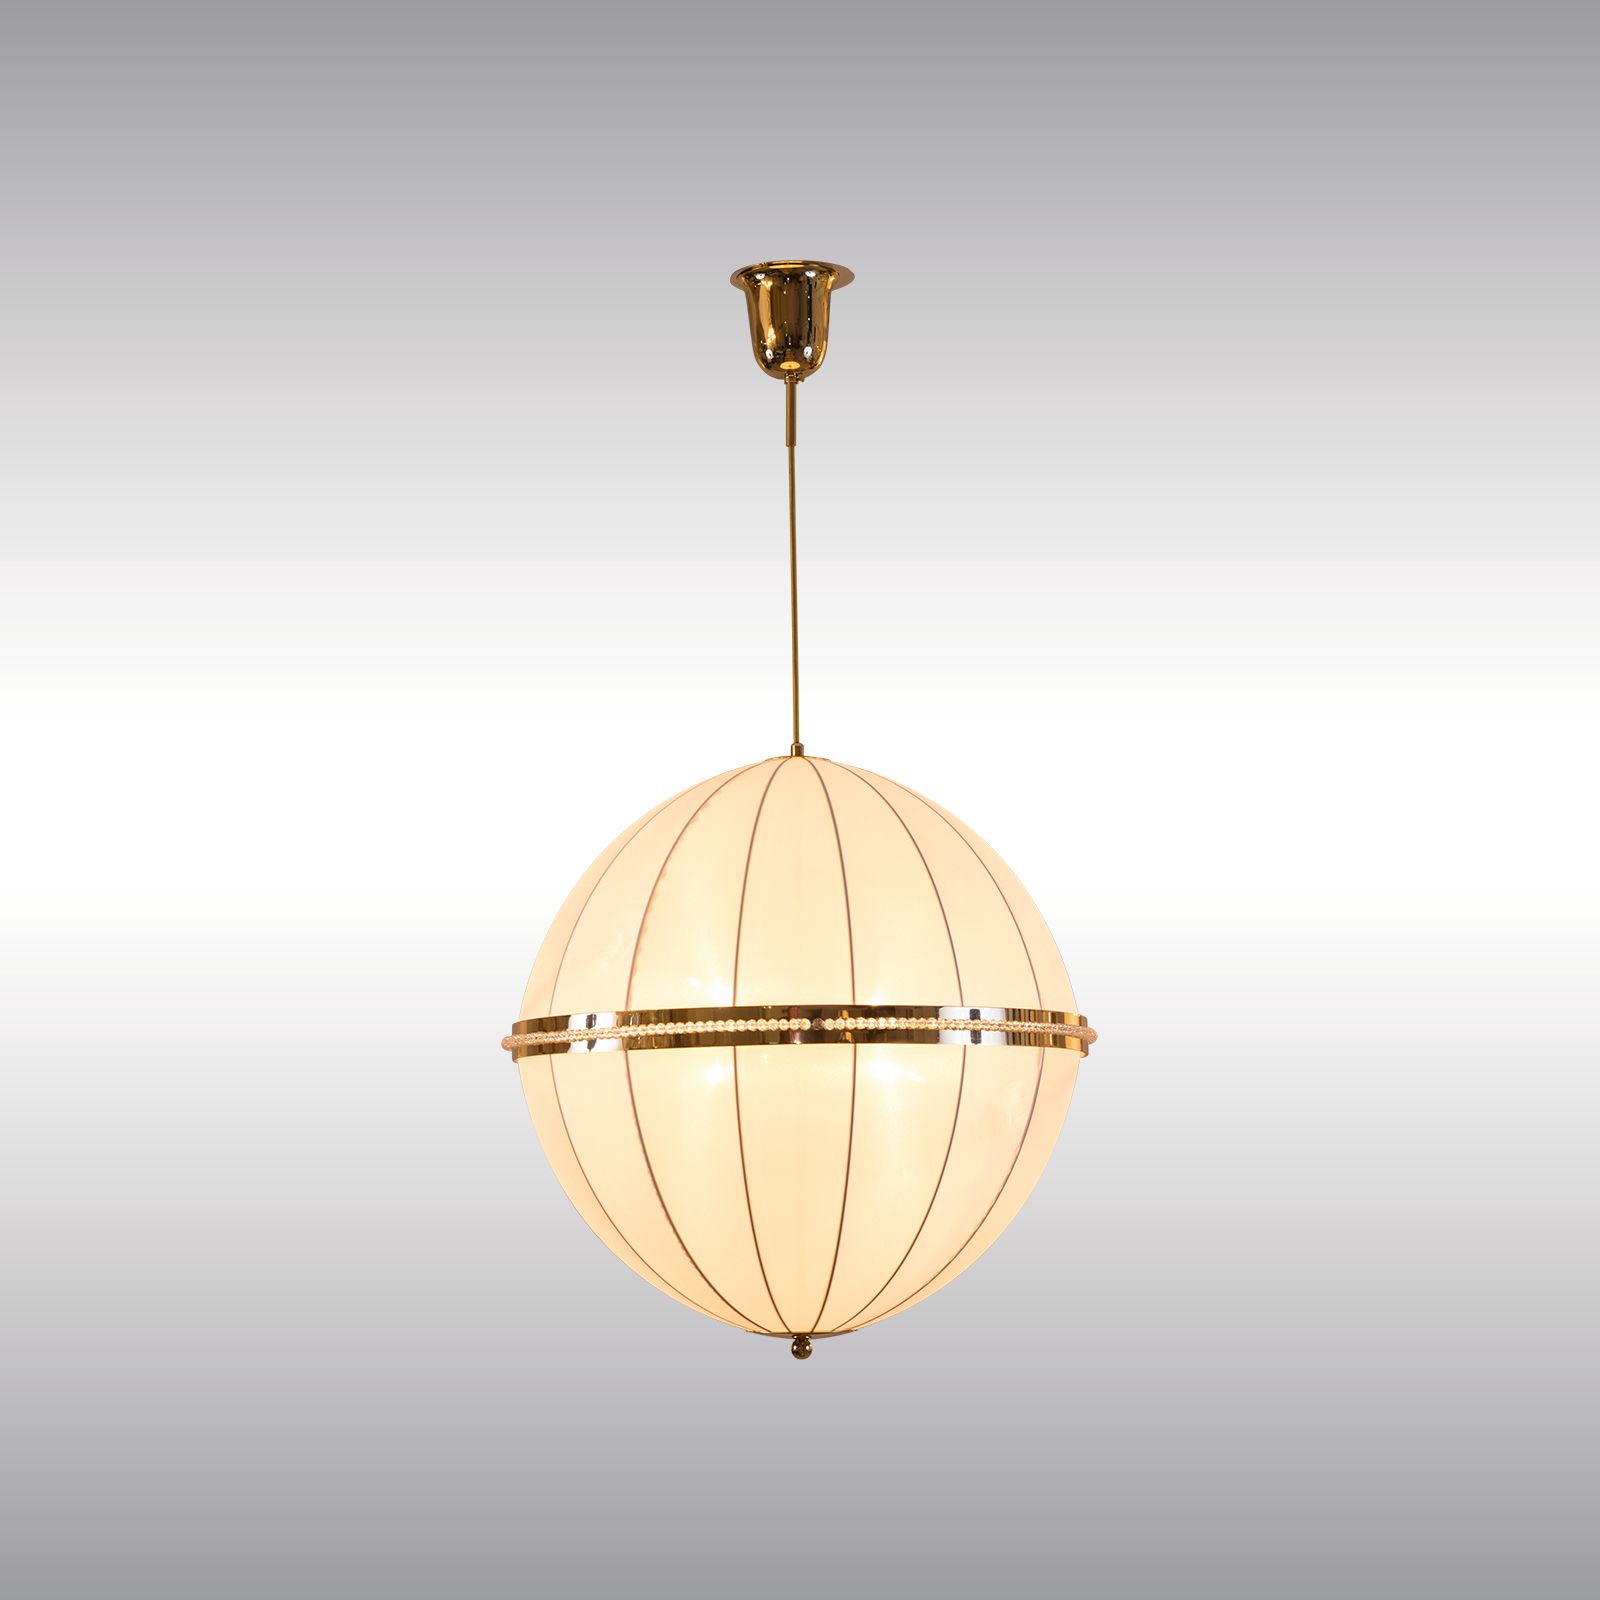 WOKA LAMPS VIENNA - OrderNr.: 21211|Luna 55 - Design: Josef Hoffmann